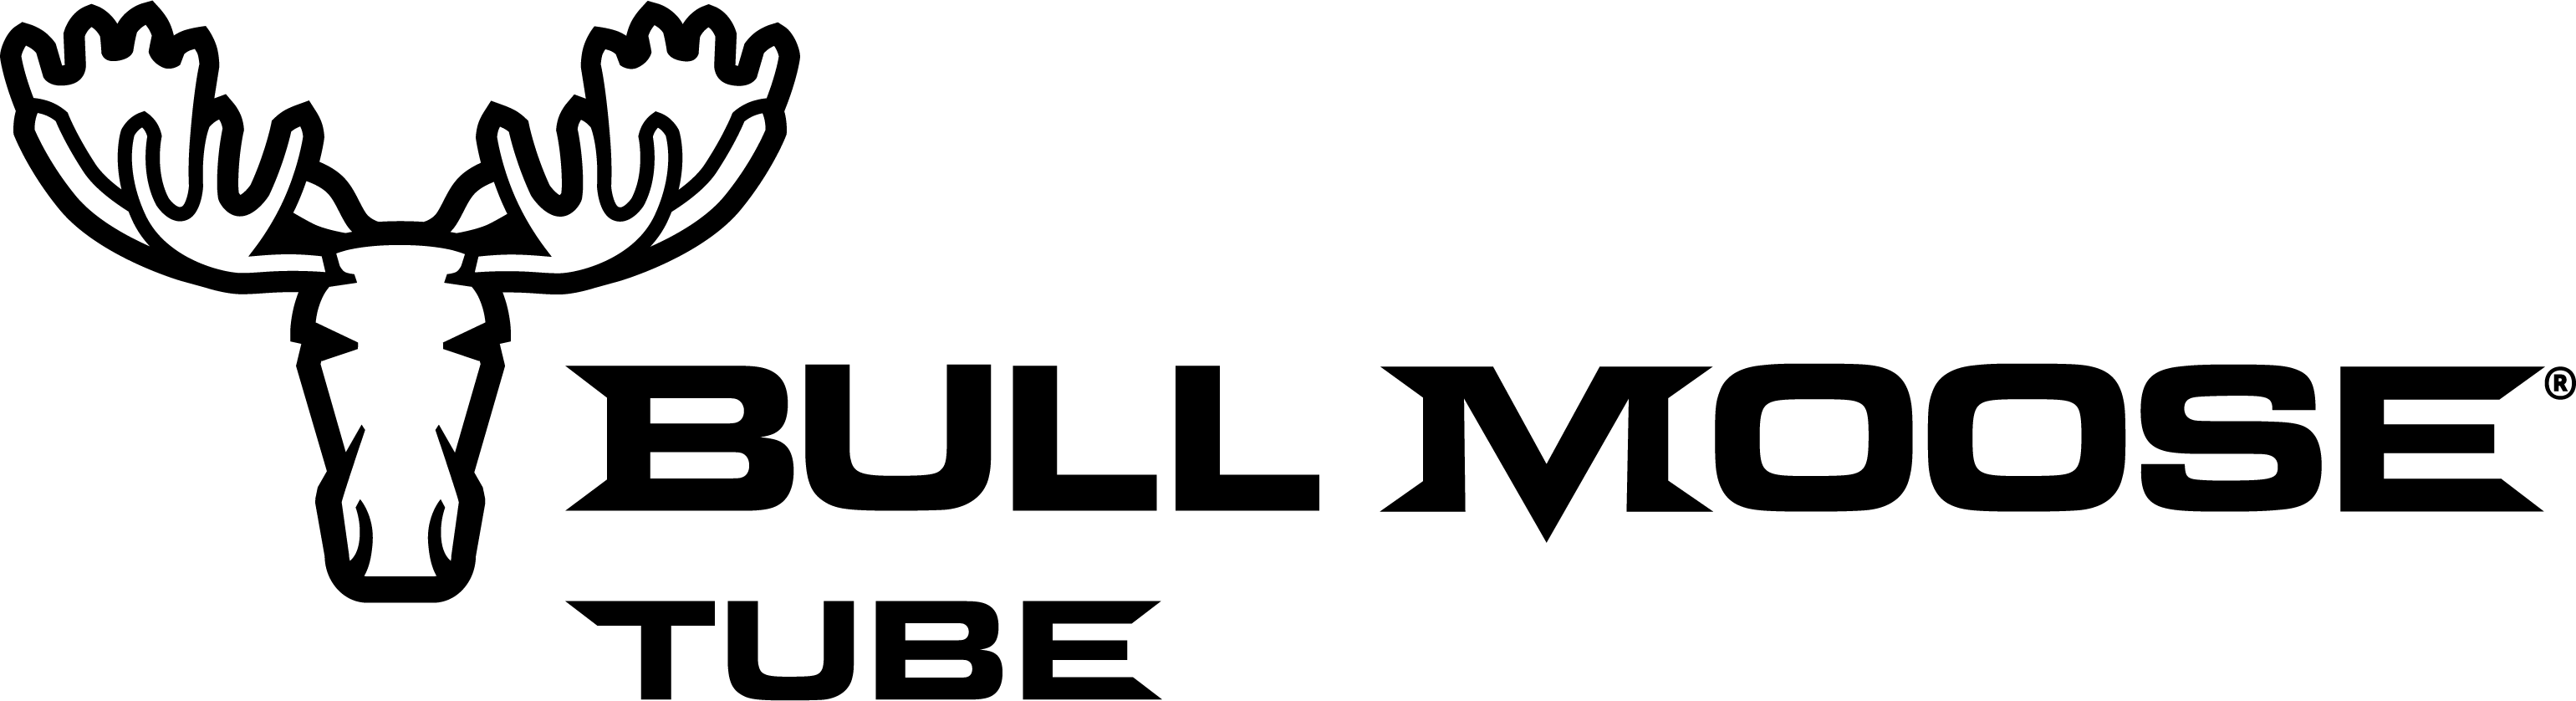 Blue Moose Logo - Bull Moose Tube